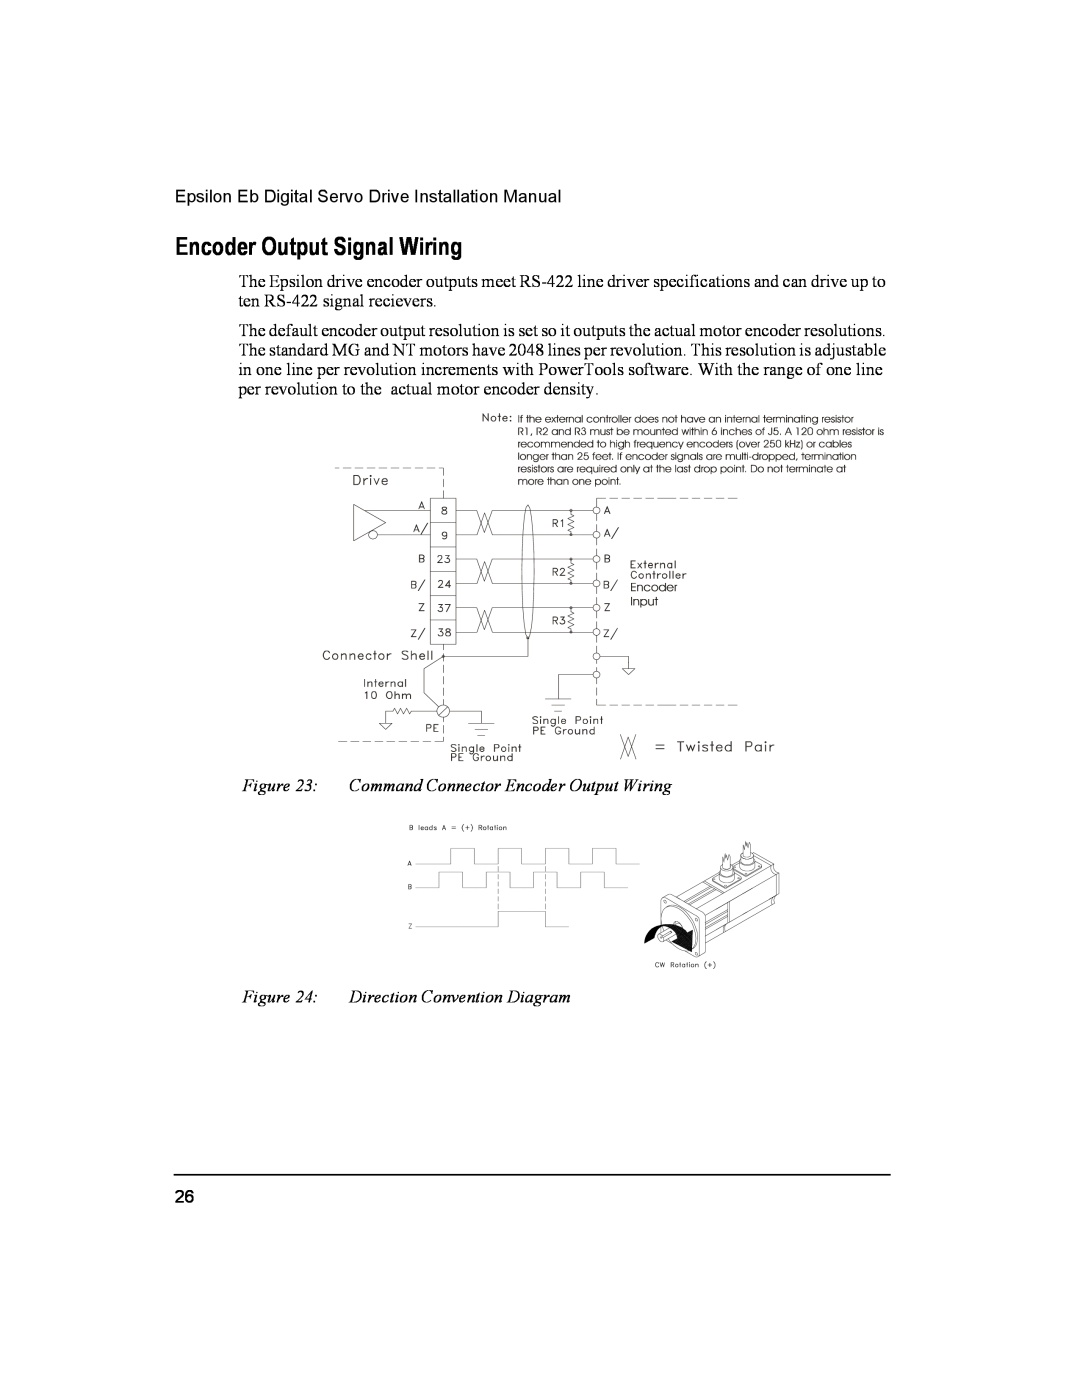 Emerson 400501-05 Encoder Output Signal Wiring, Command Connector Encoder Output Wiring, Direction Convention Diagram 